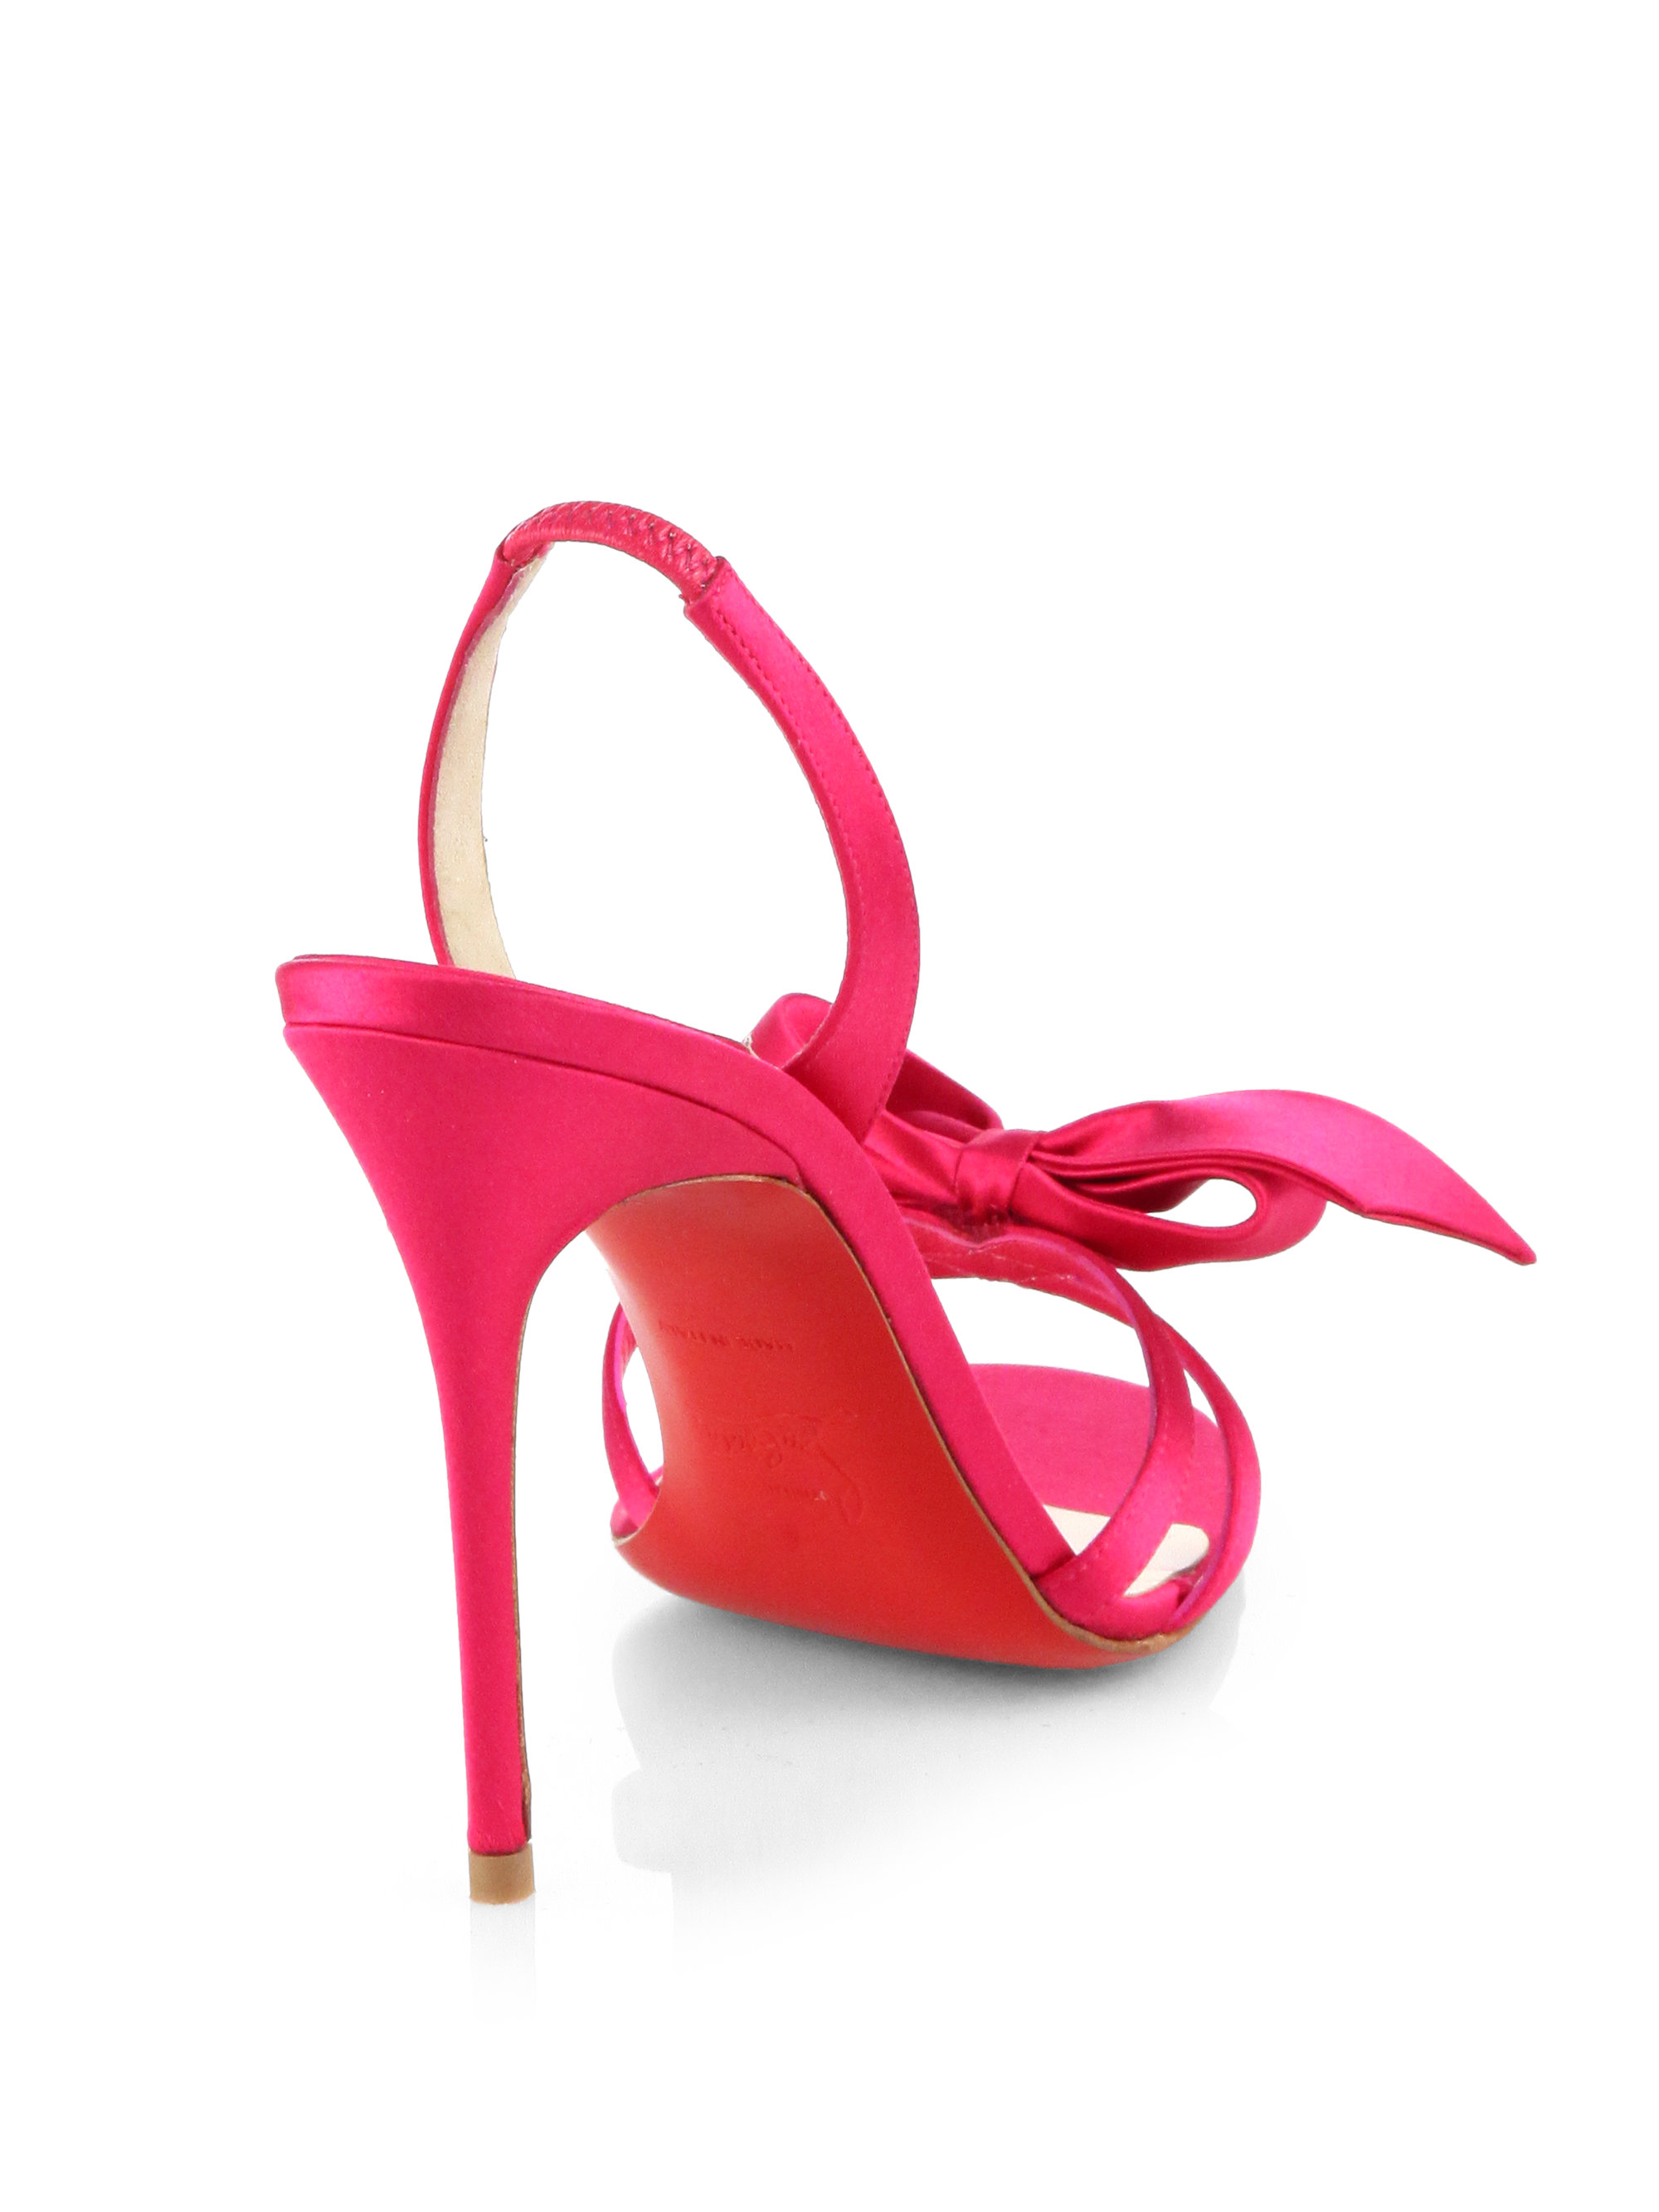 christian louboutin sandals Pink satin | cosmetics digital ...